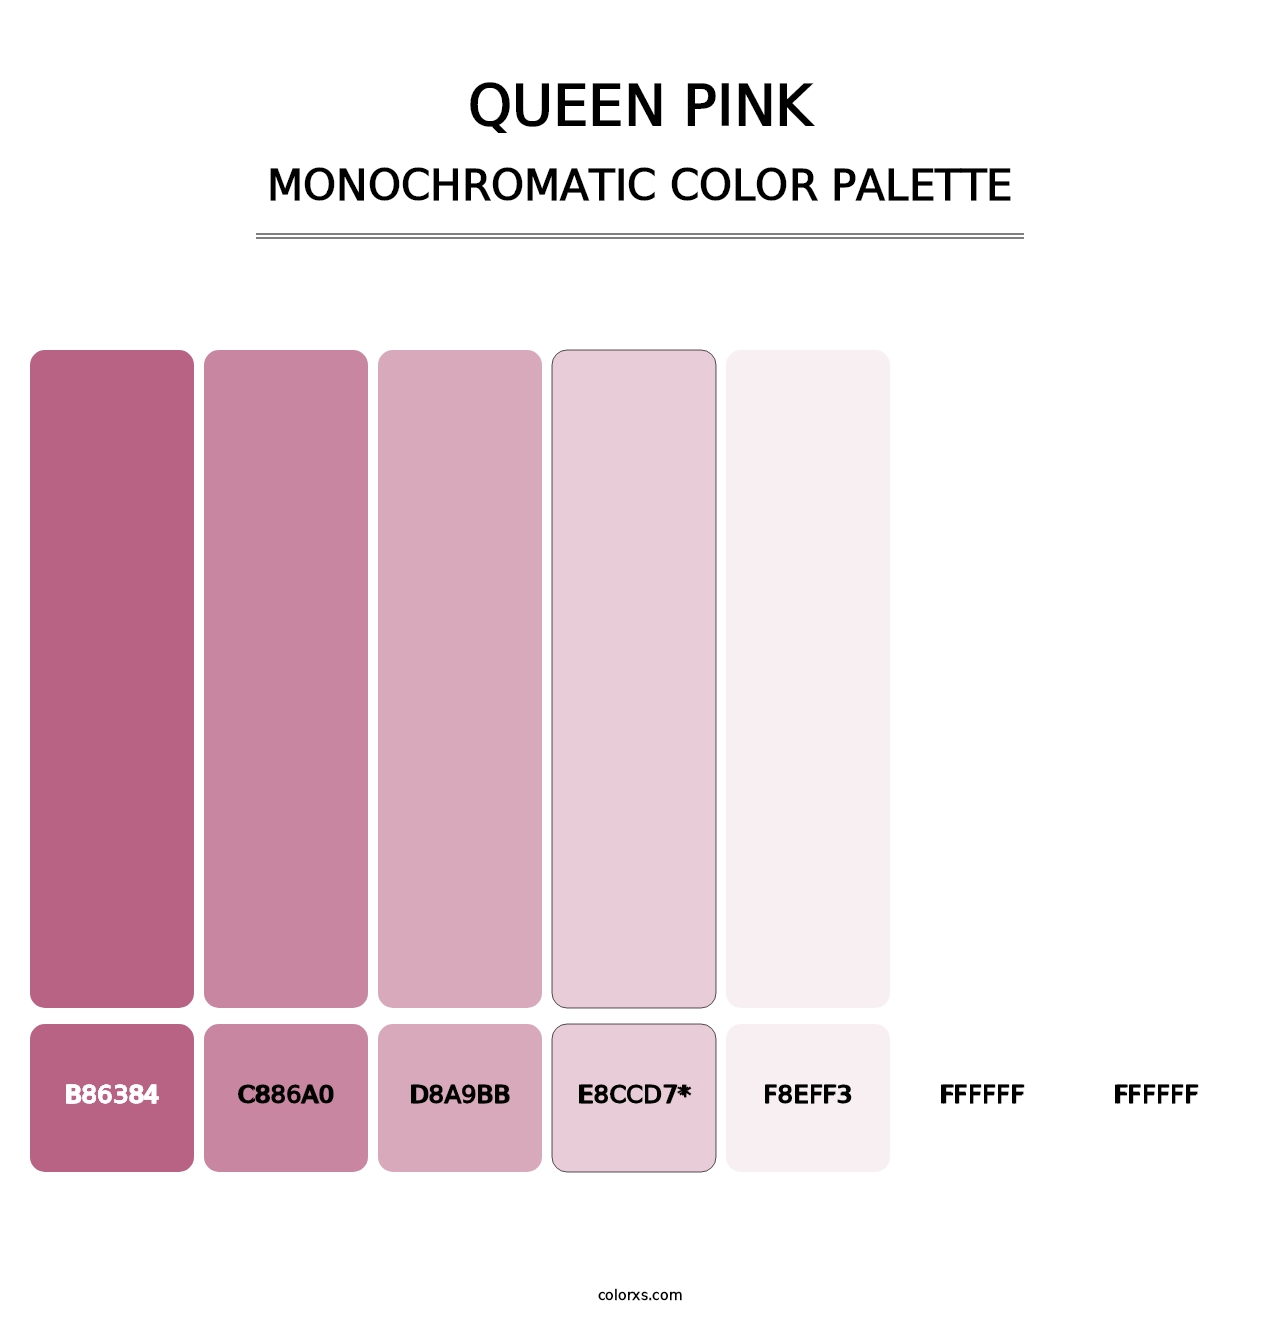 Queen Pink - Monochromatic Color Palette